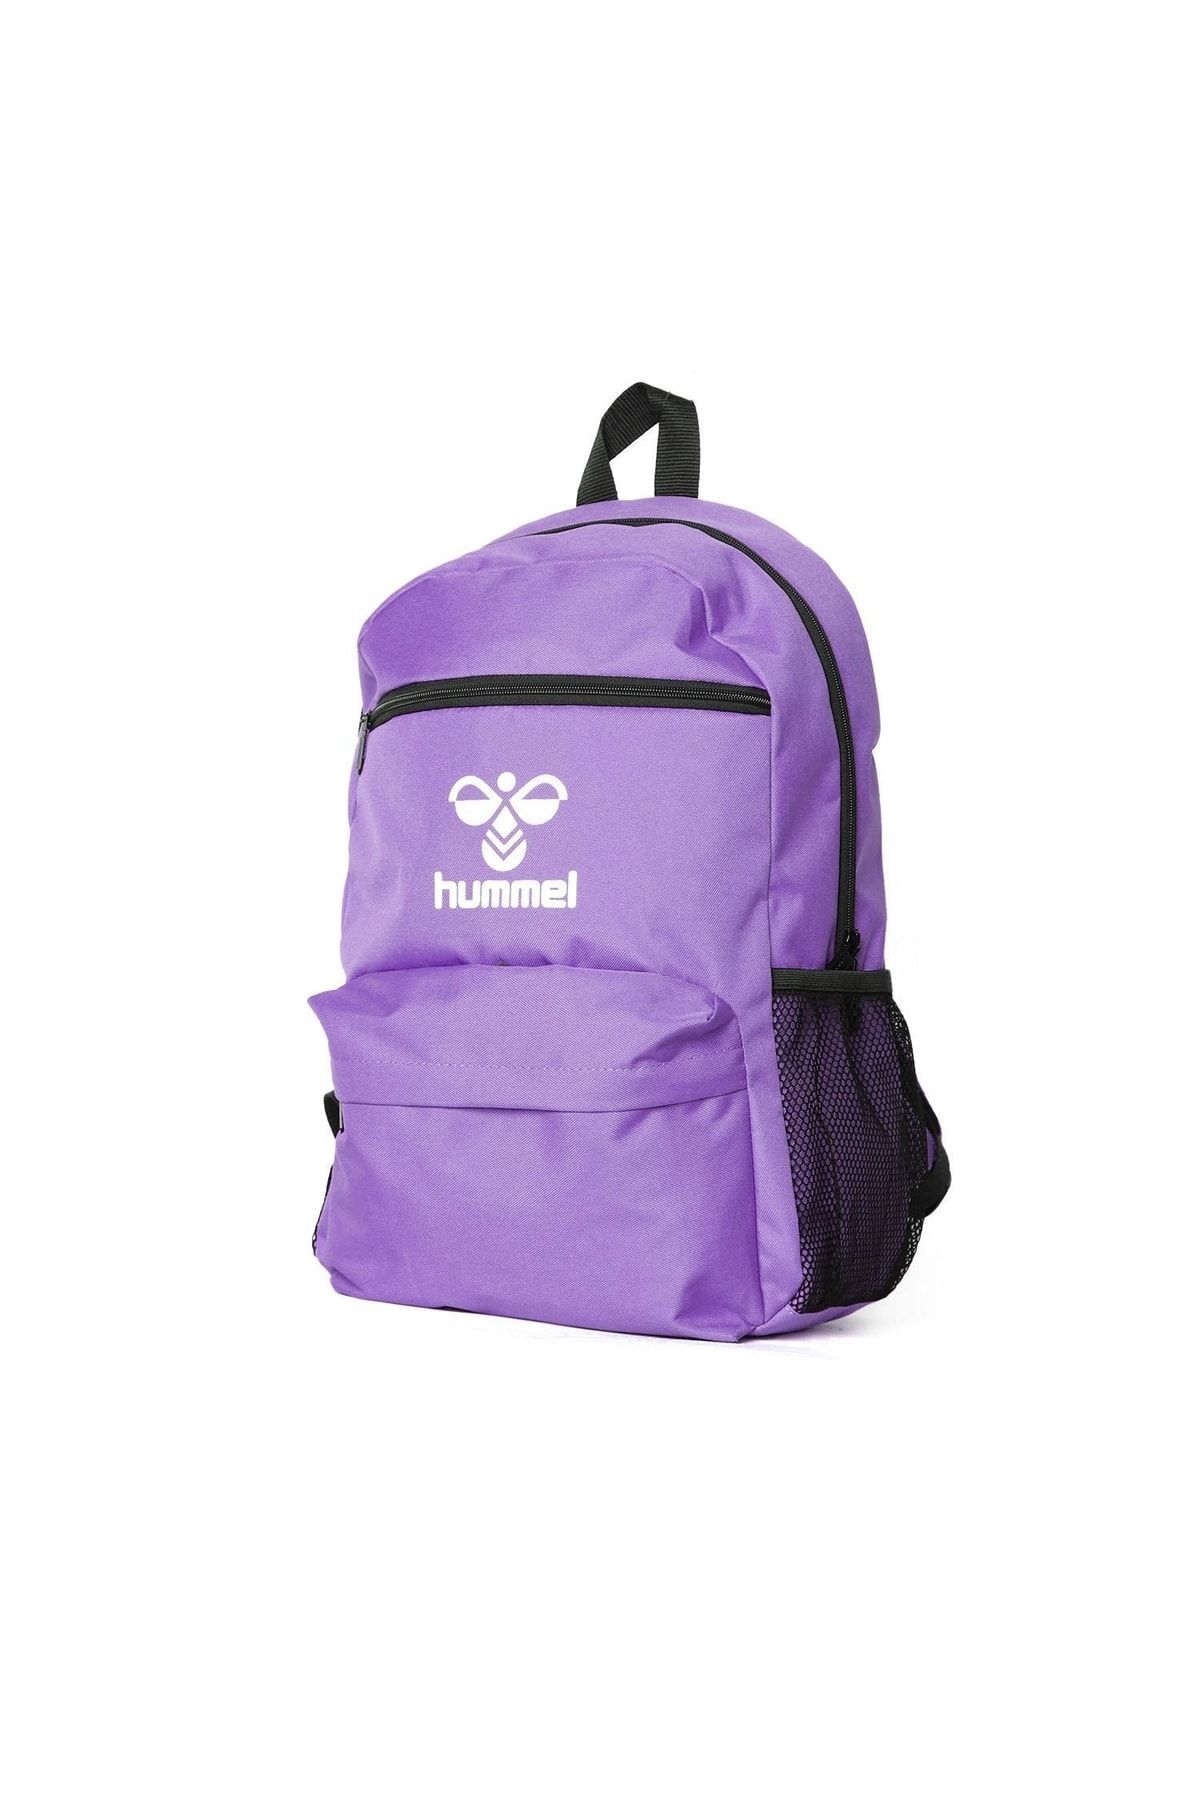 hummel Hmlchevy Backpack